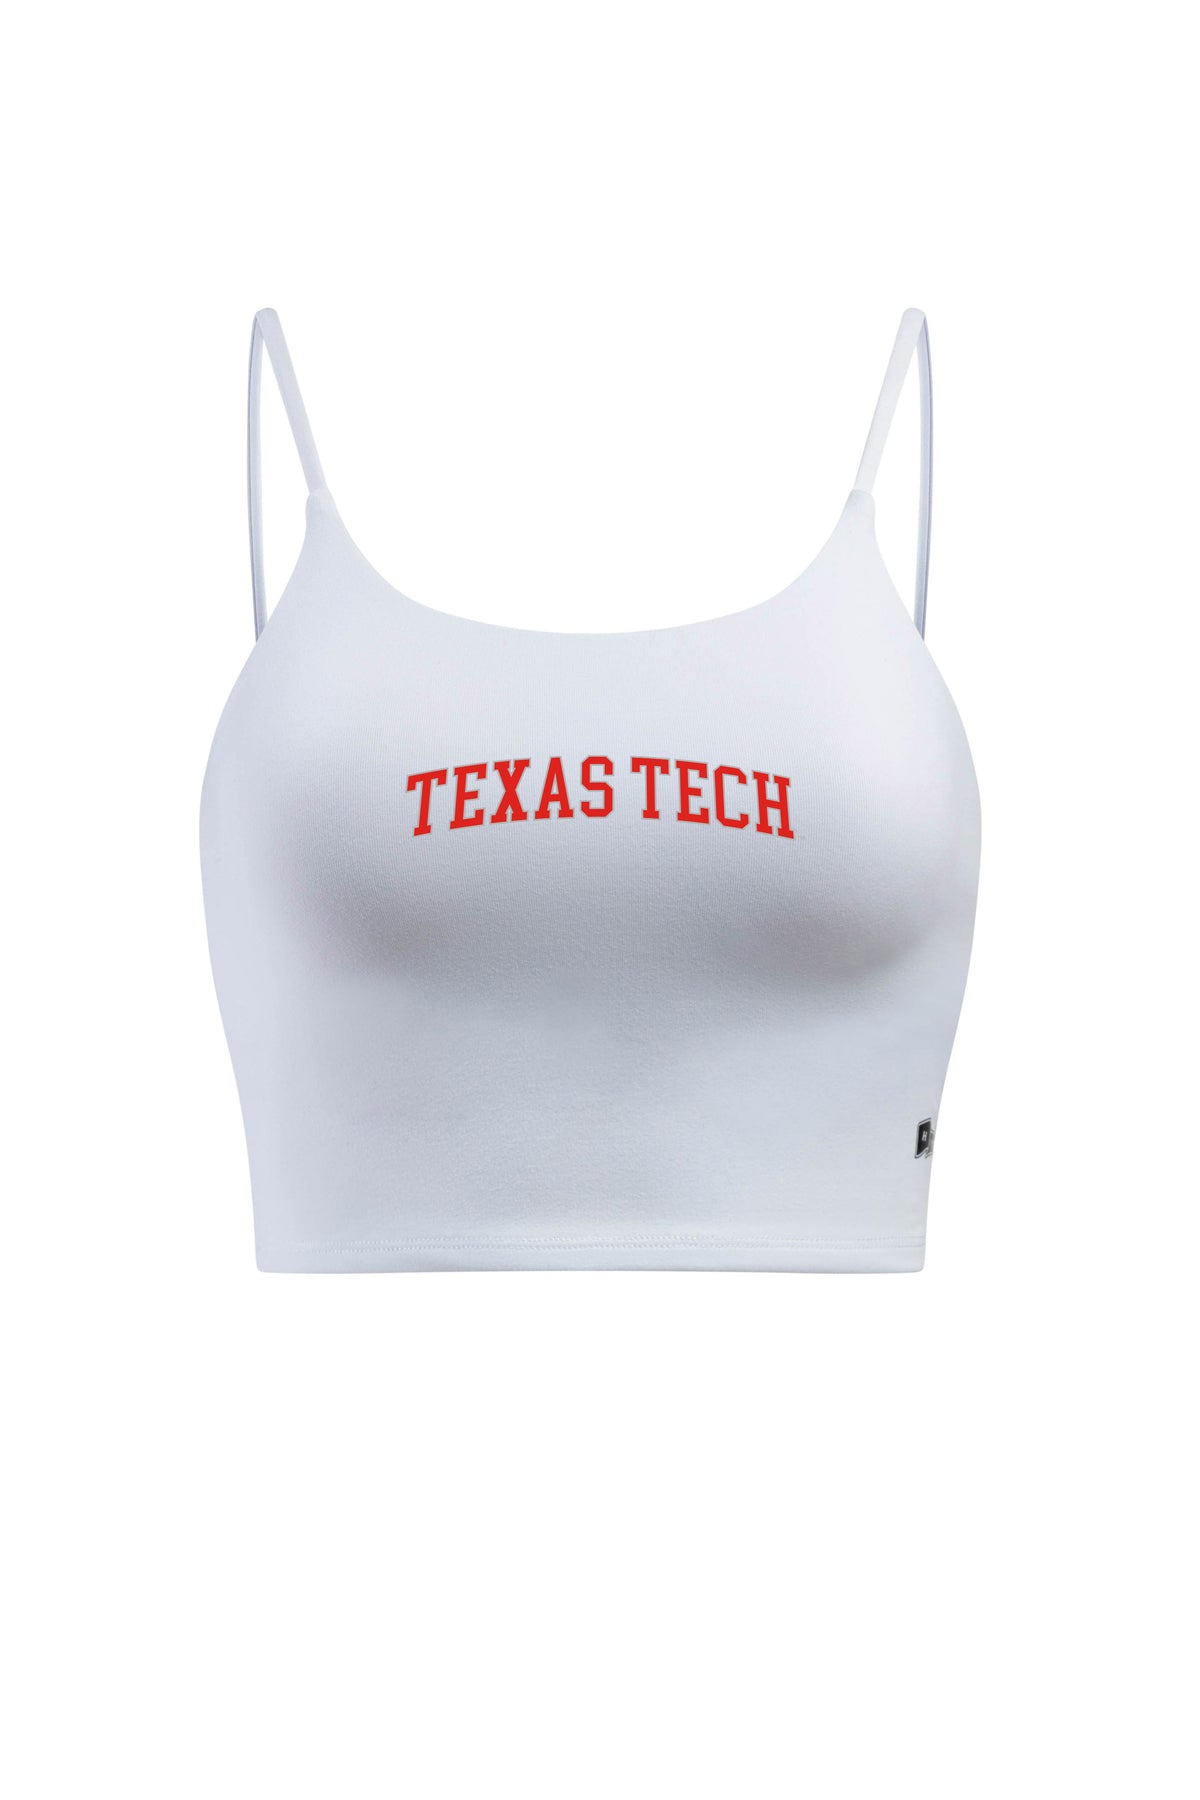 Texas Tech University Bra Tank Top